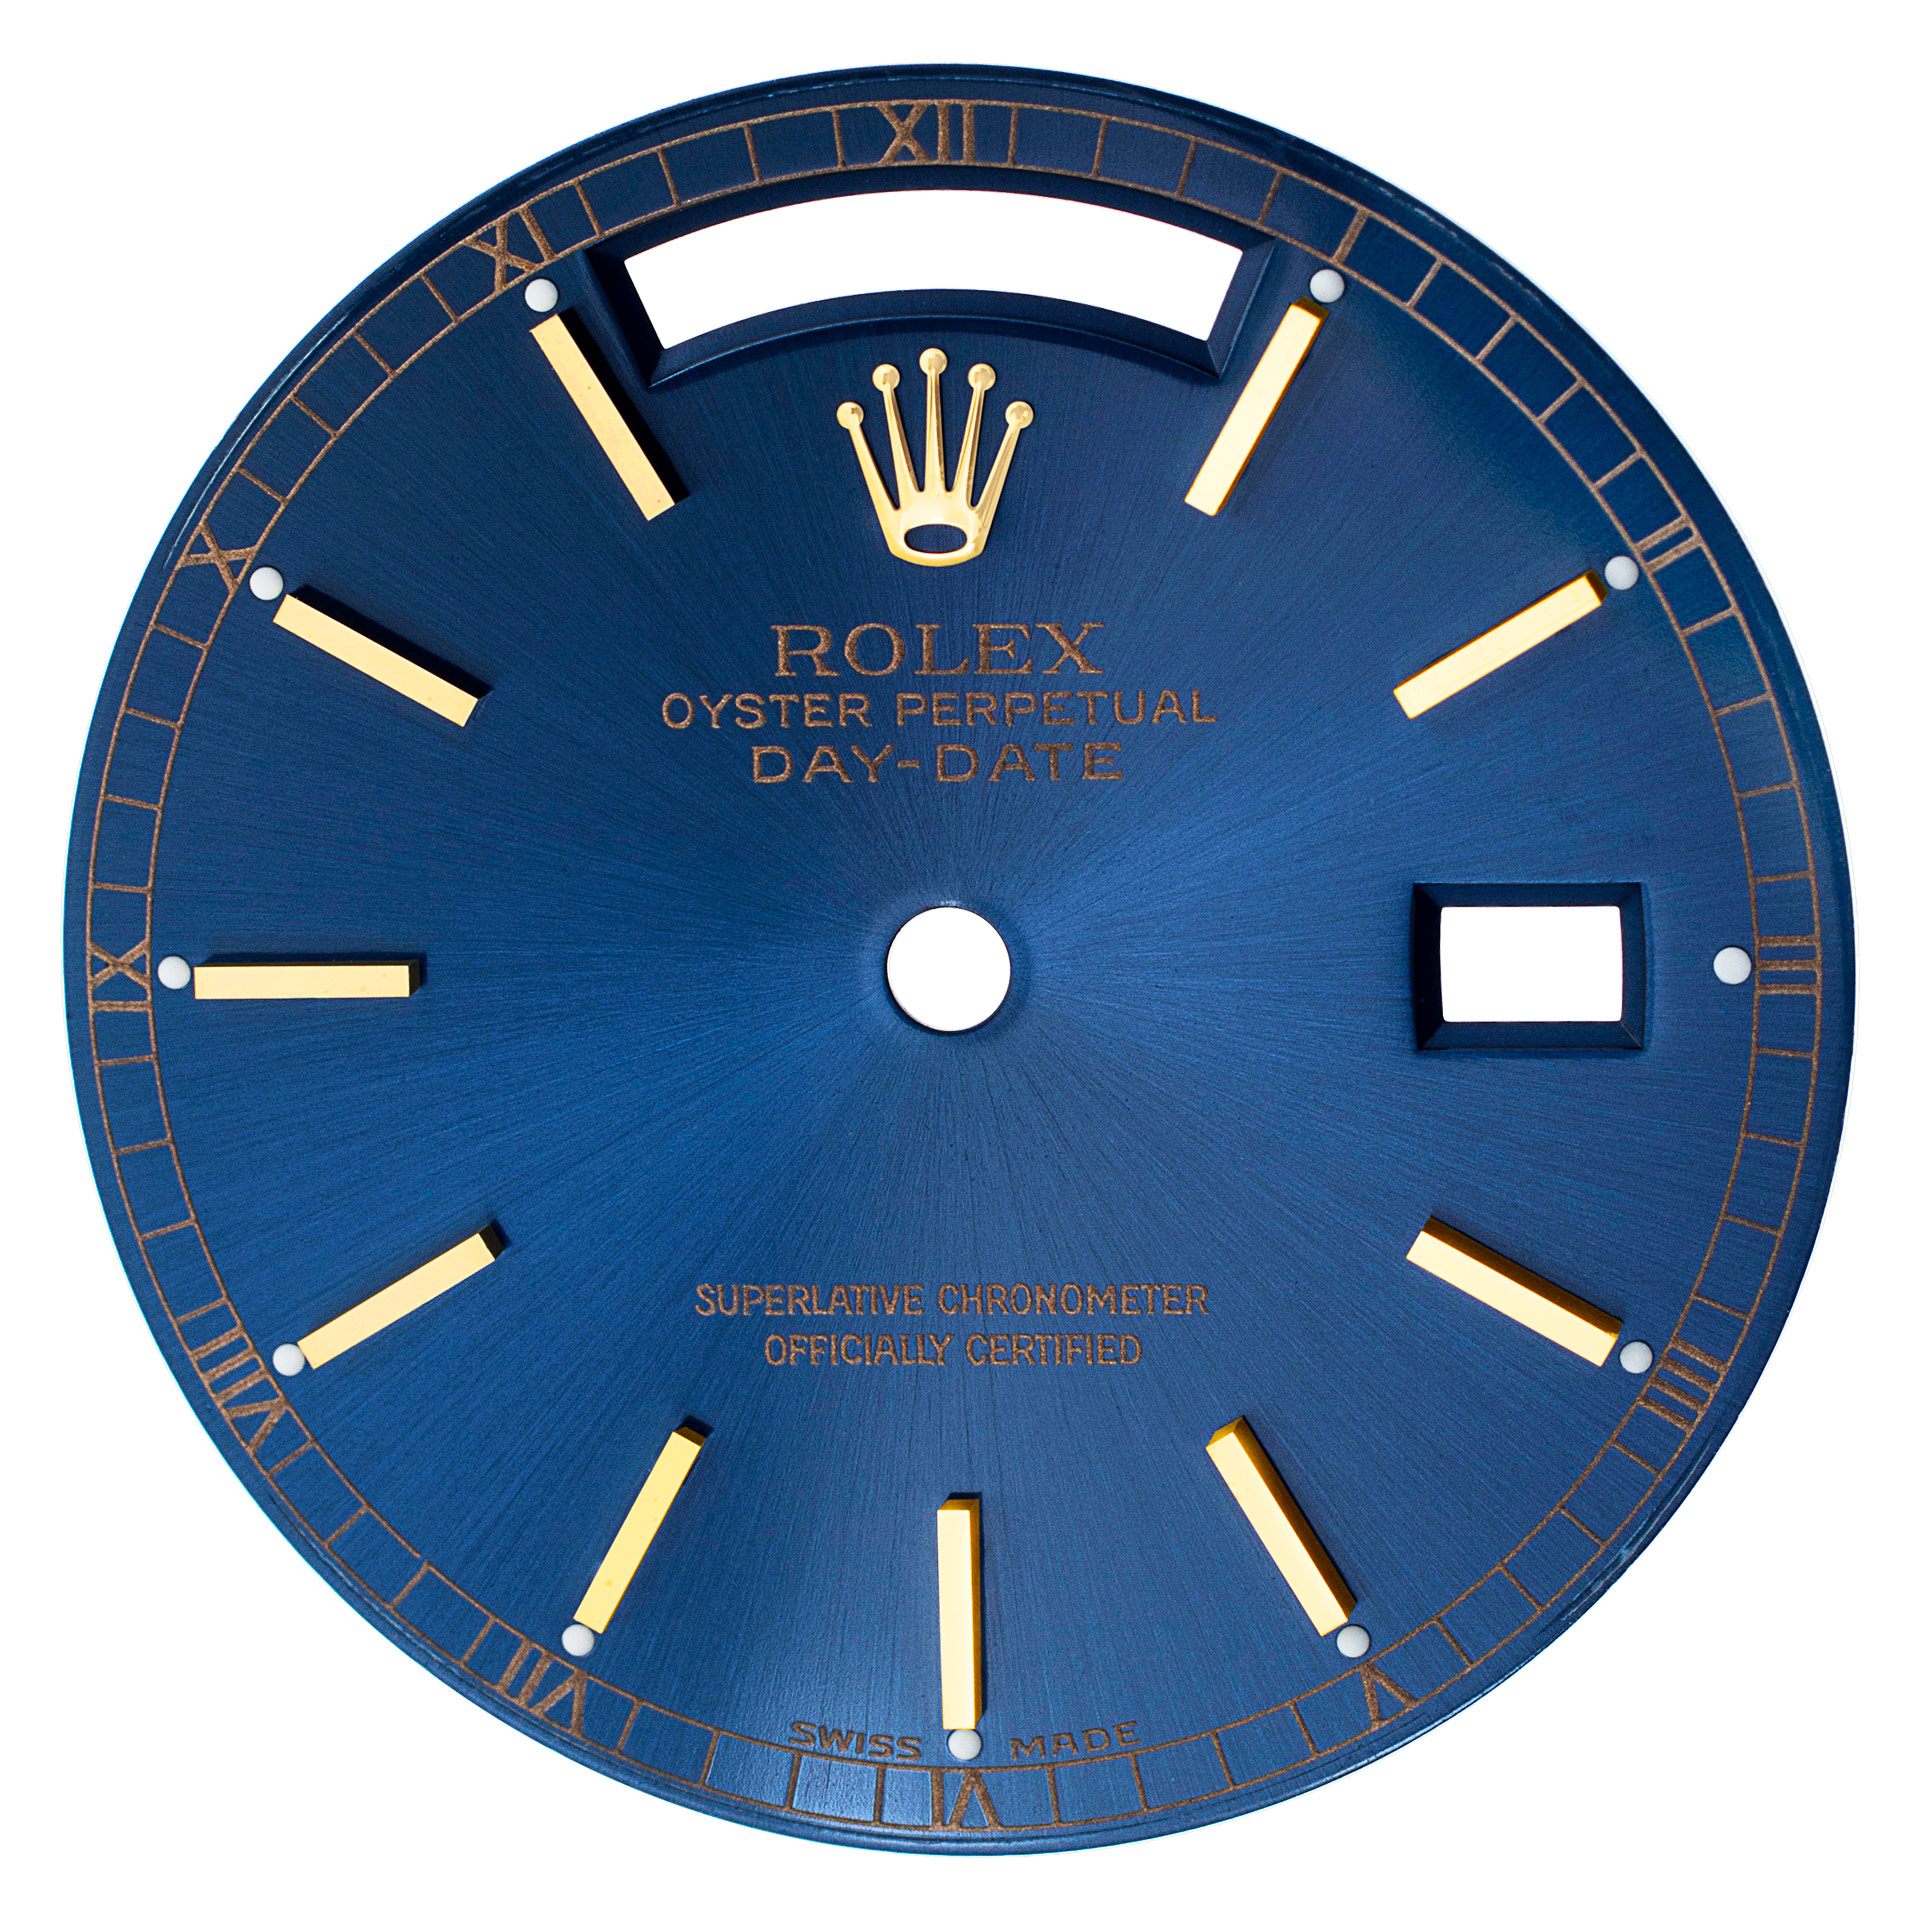 Rolex Day-date blue dial